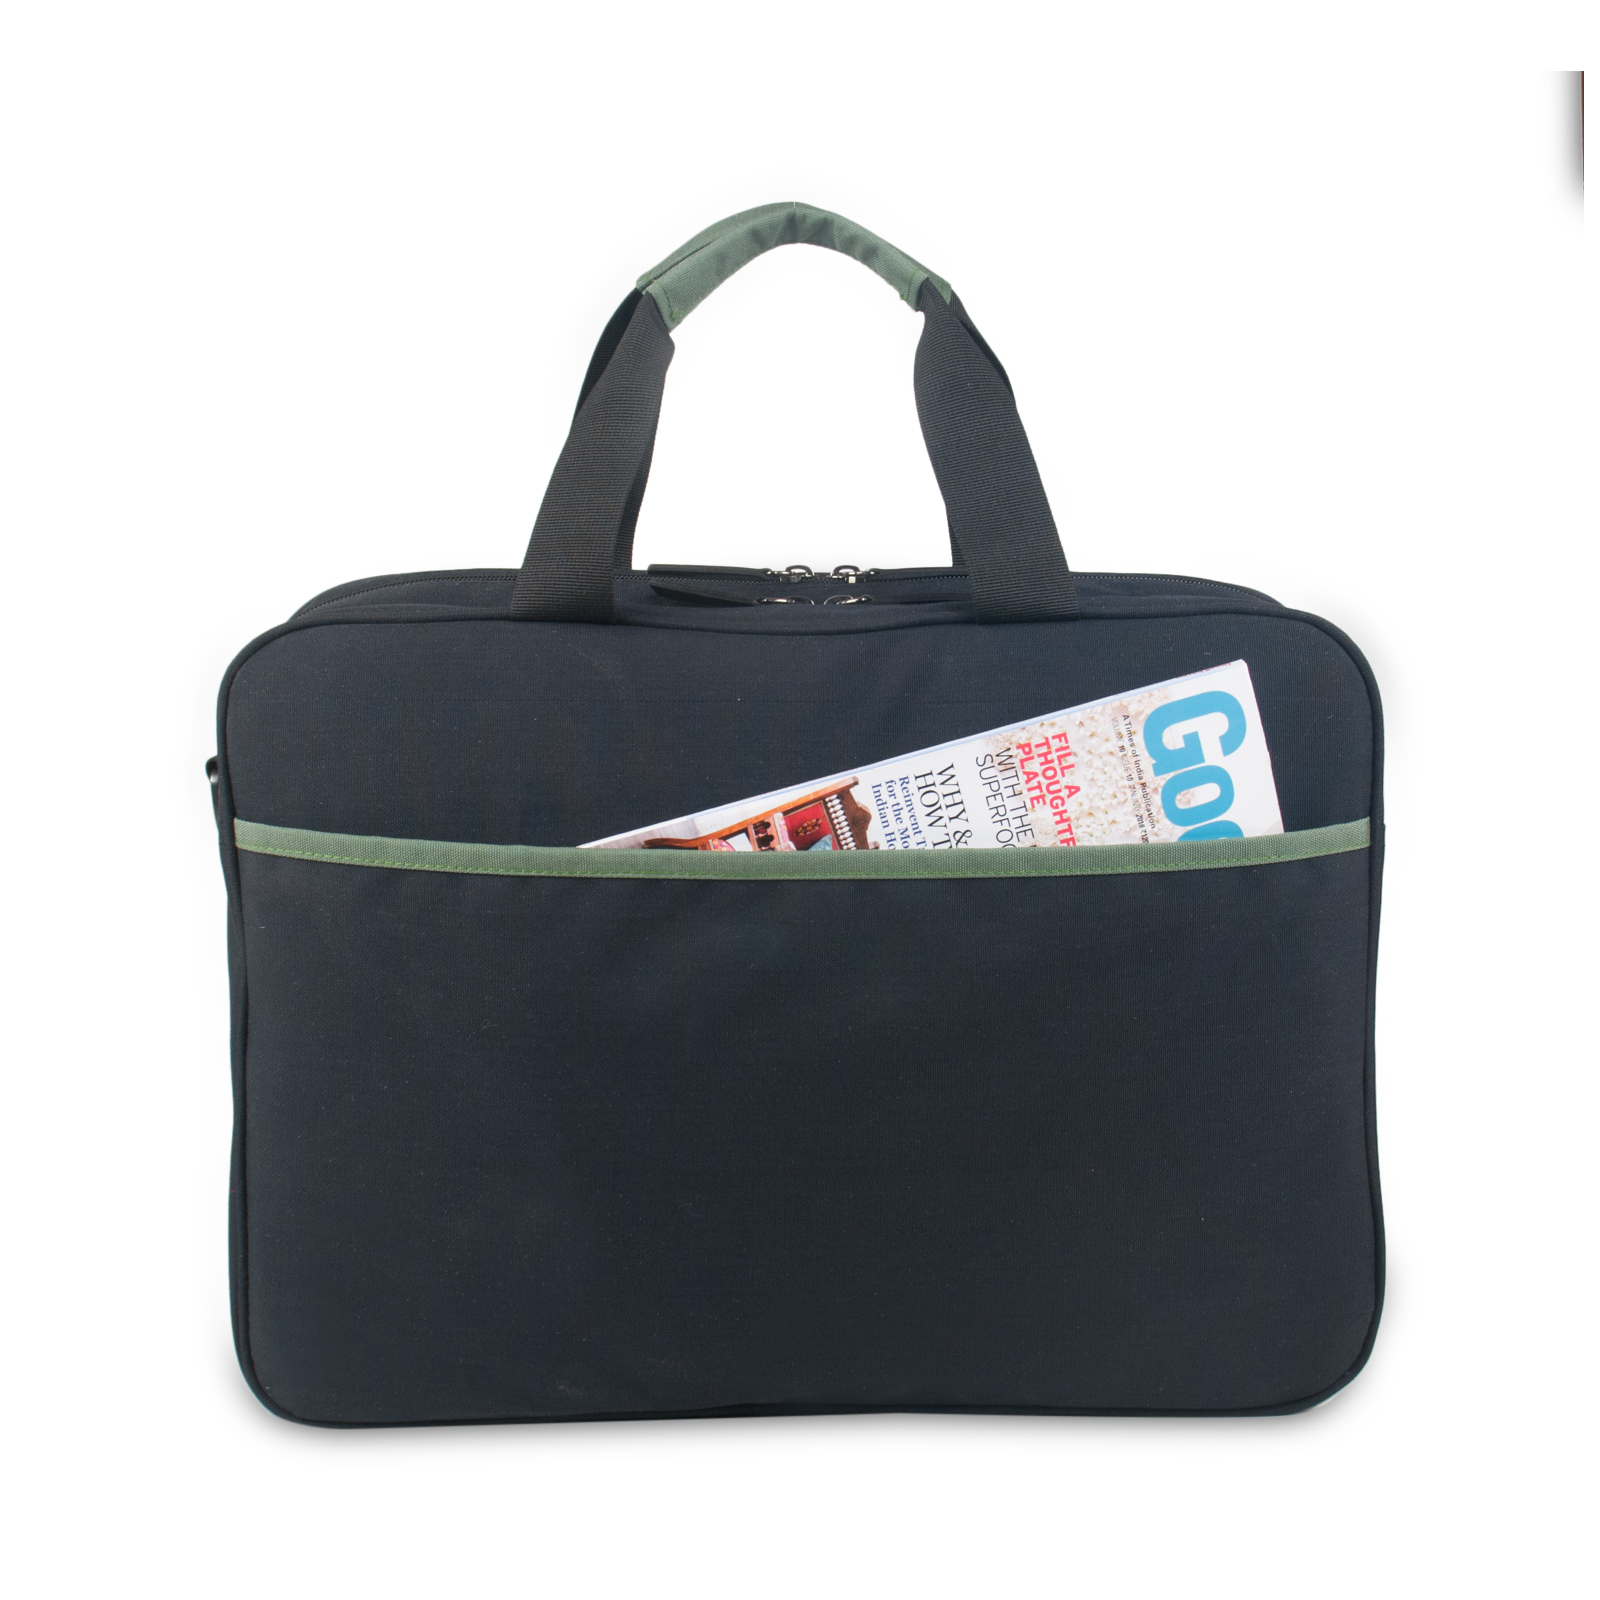 Protect Road Warrior Laptop Bag Black-Green- 3